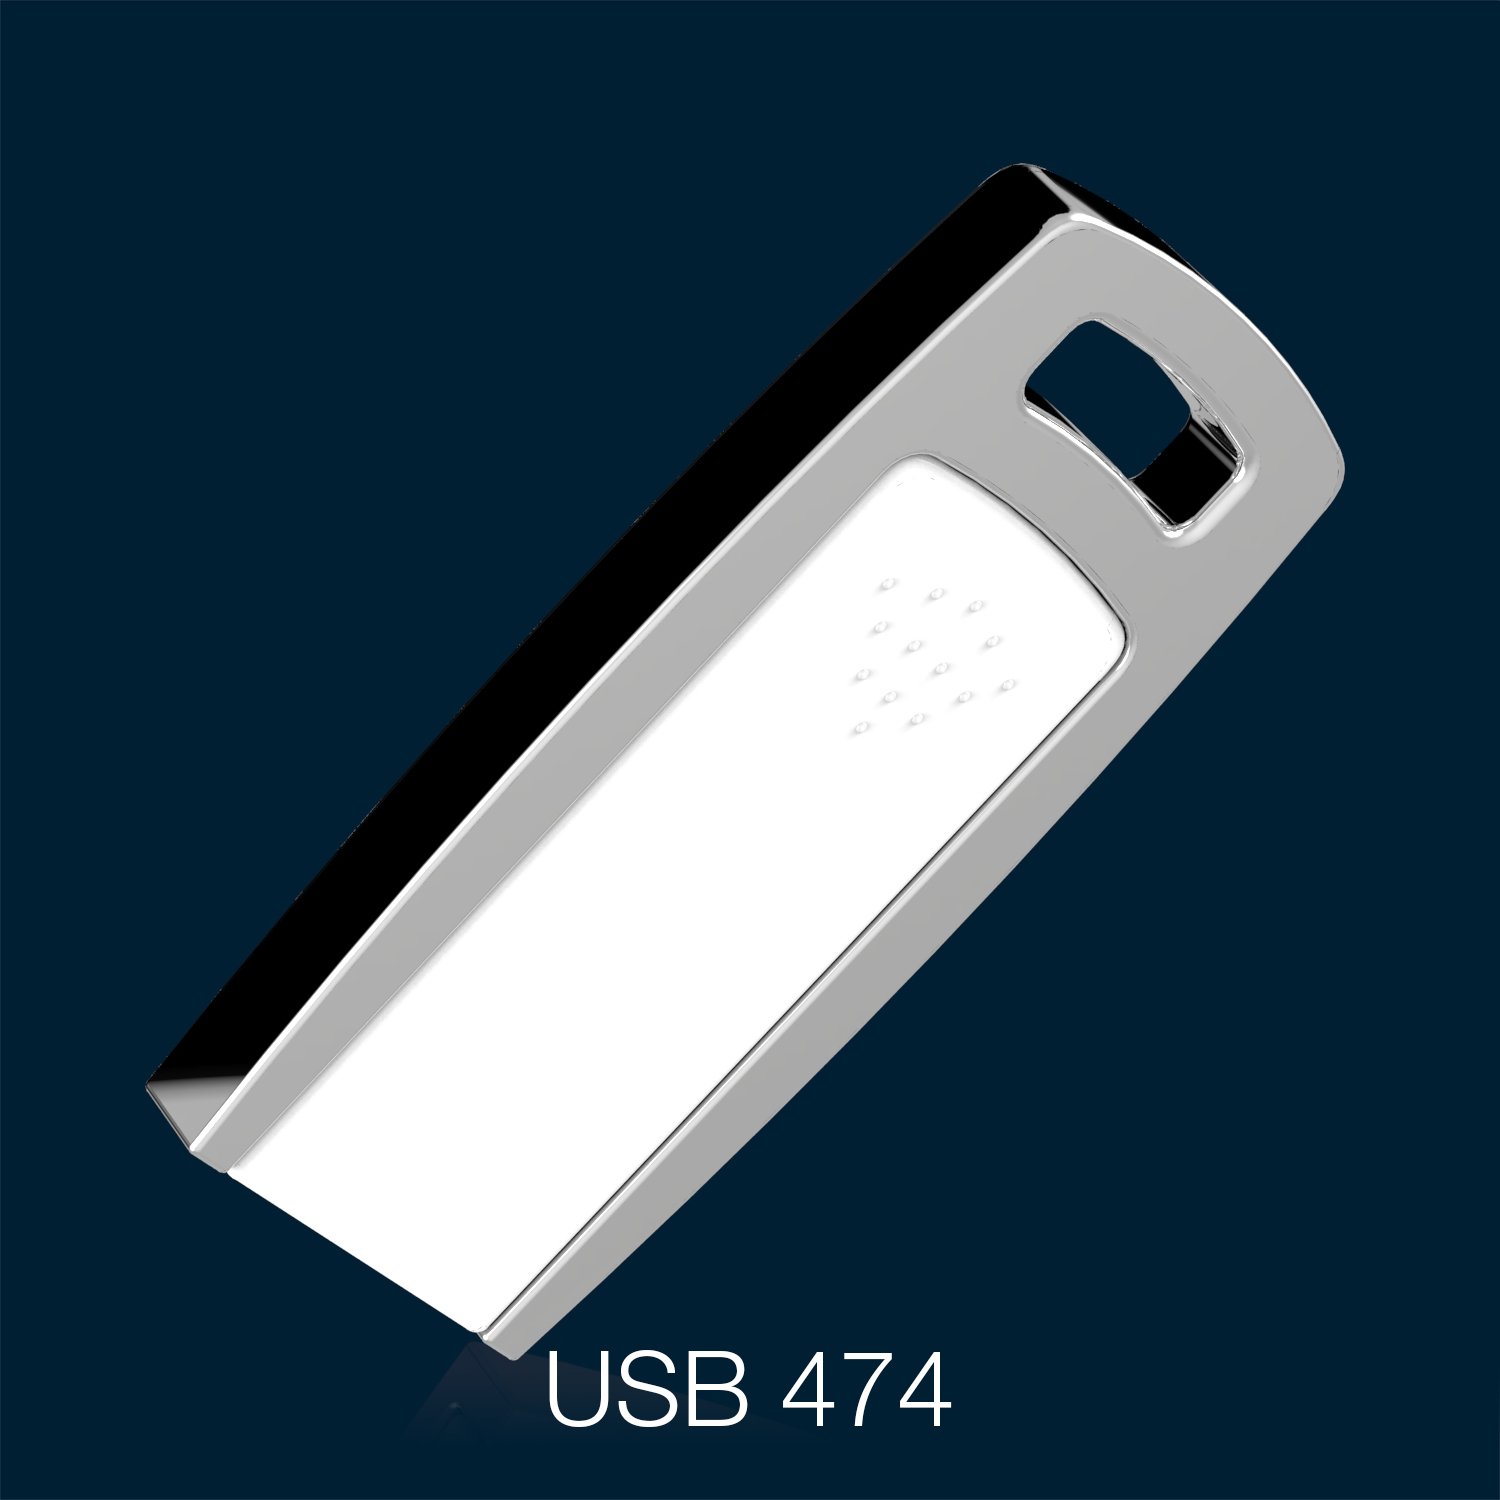 USB 474